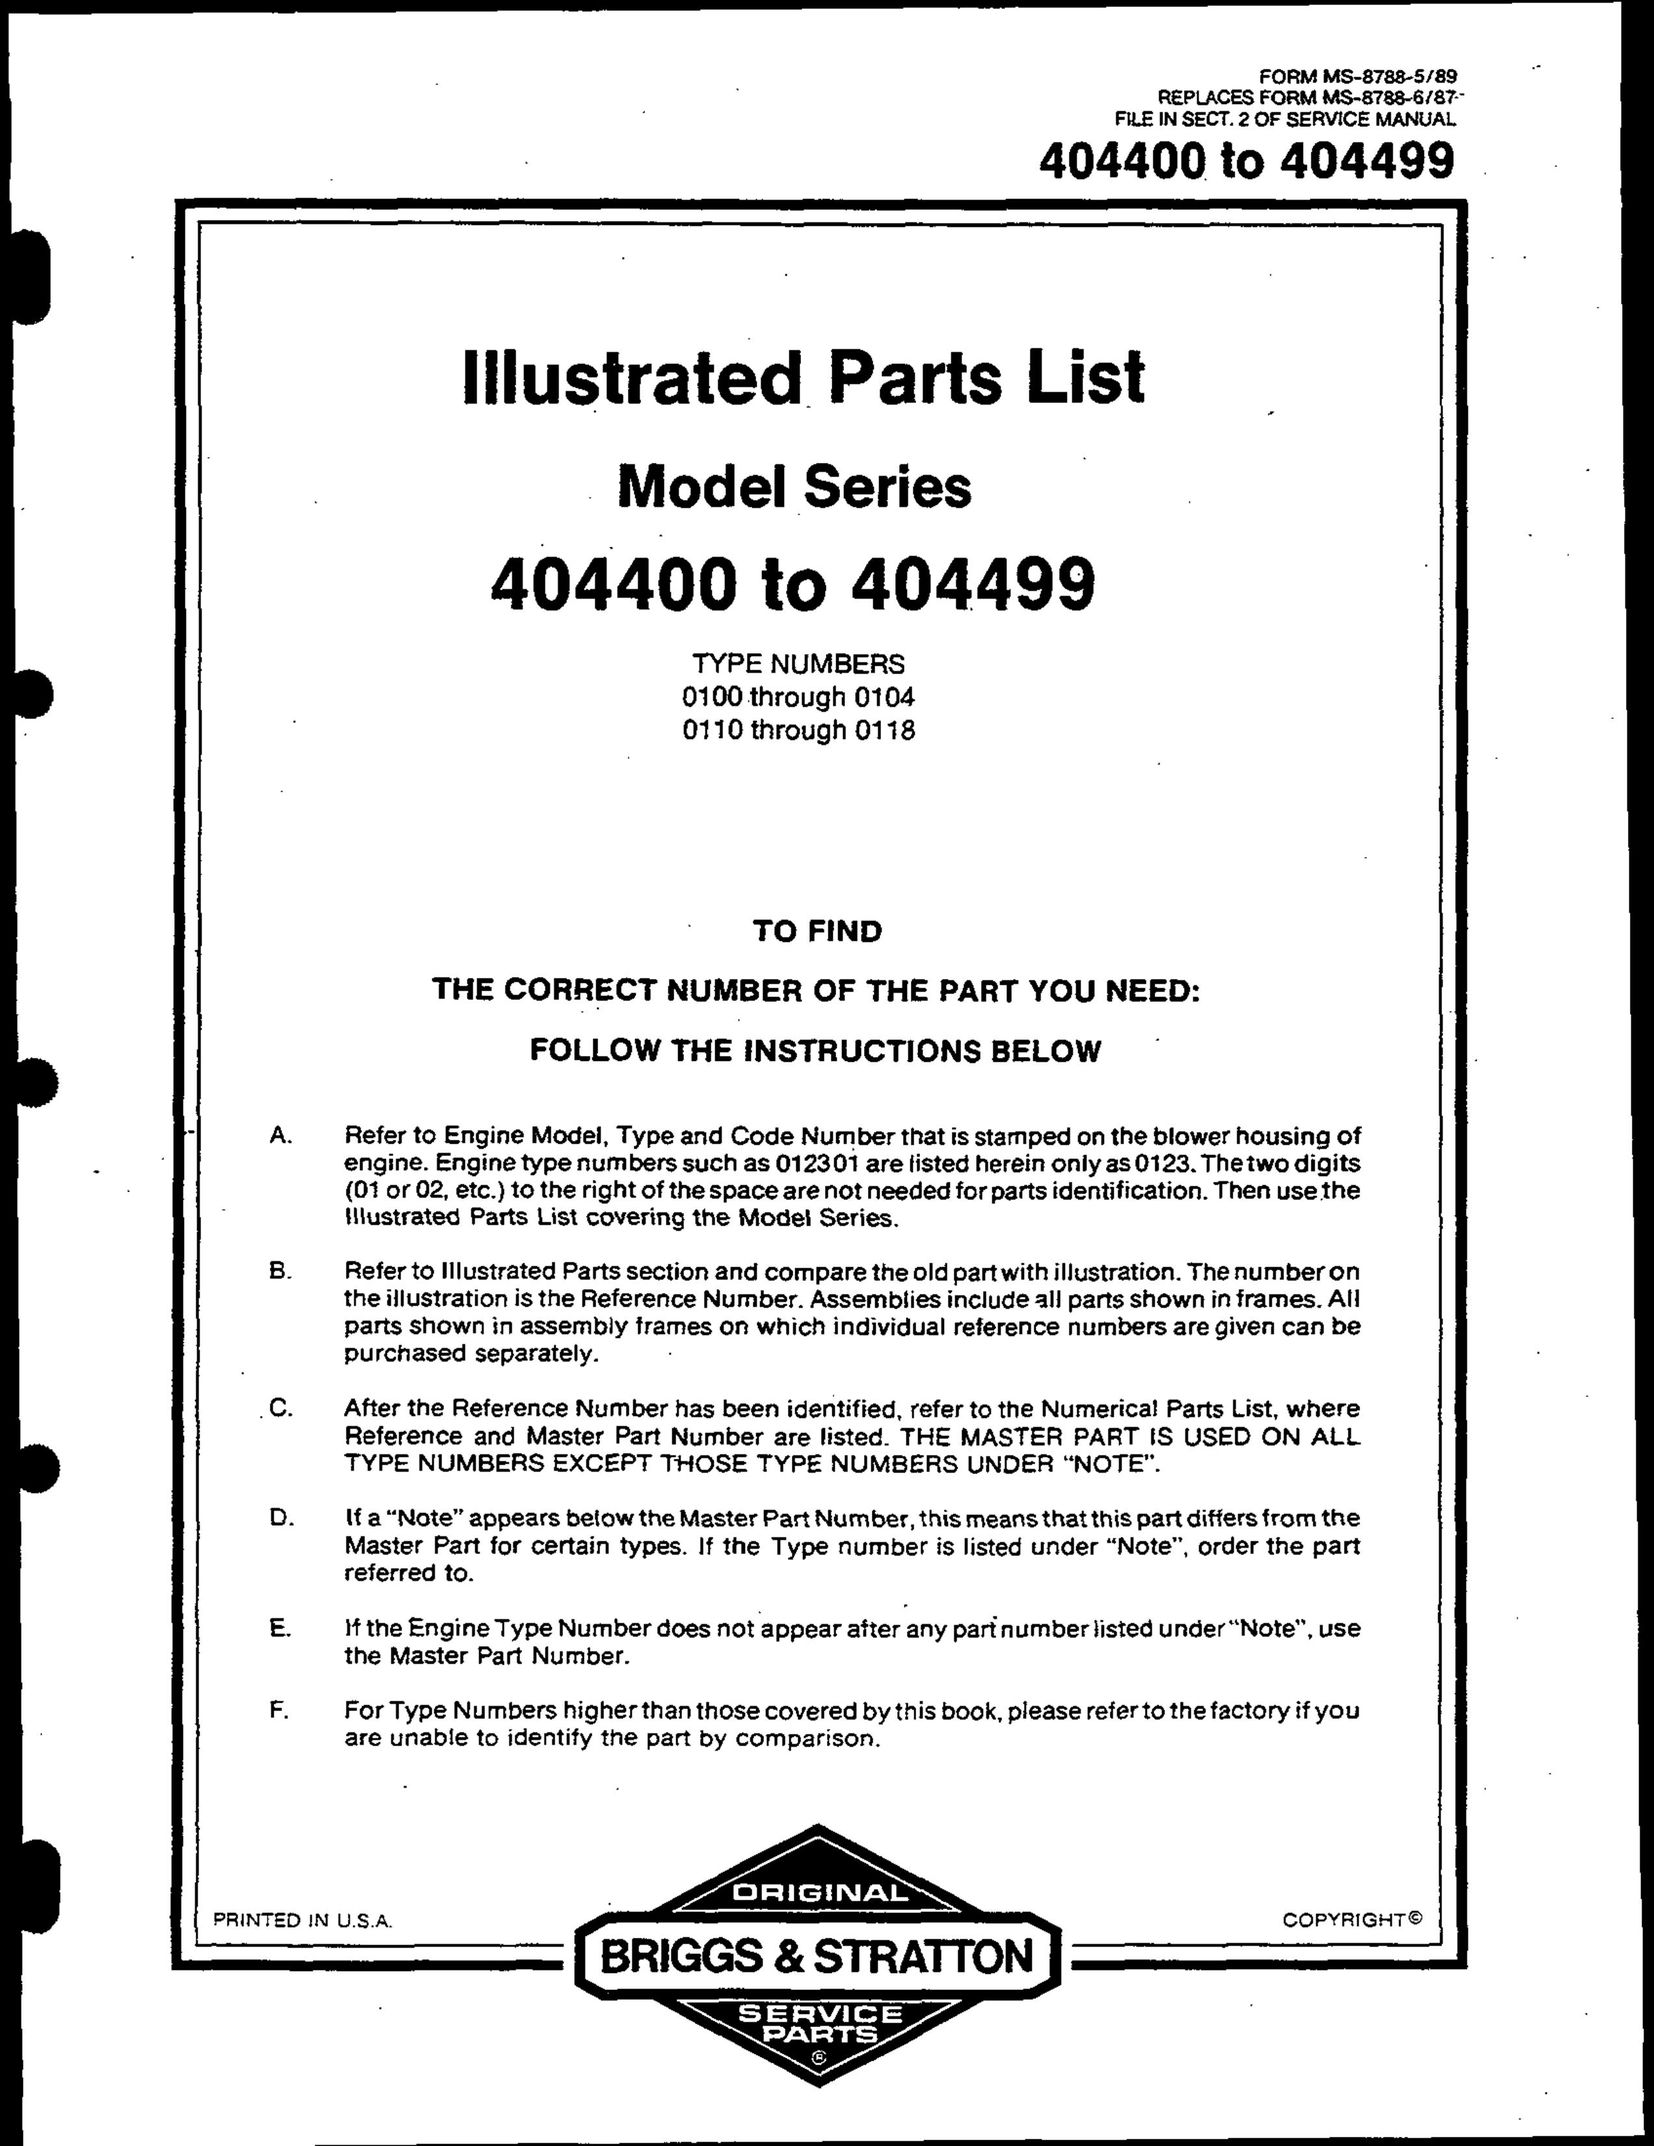 Briggs & Stratton 404499 Flat Panel Television User Manual